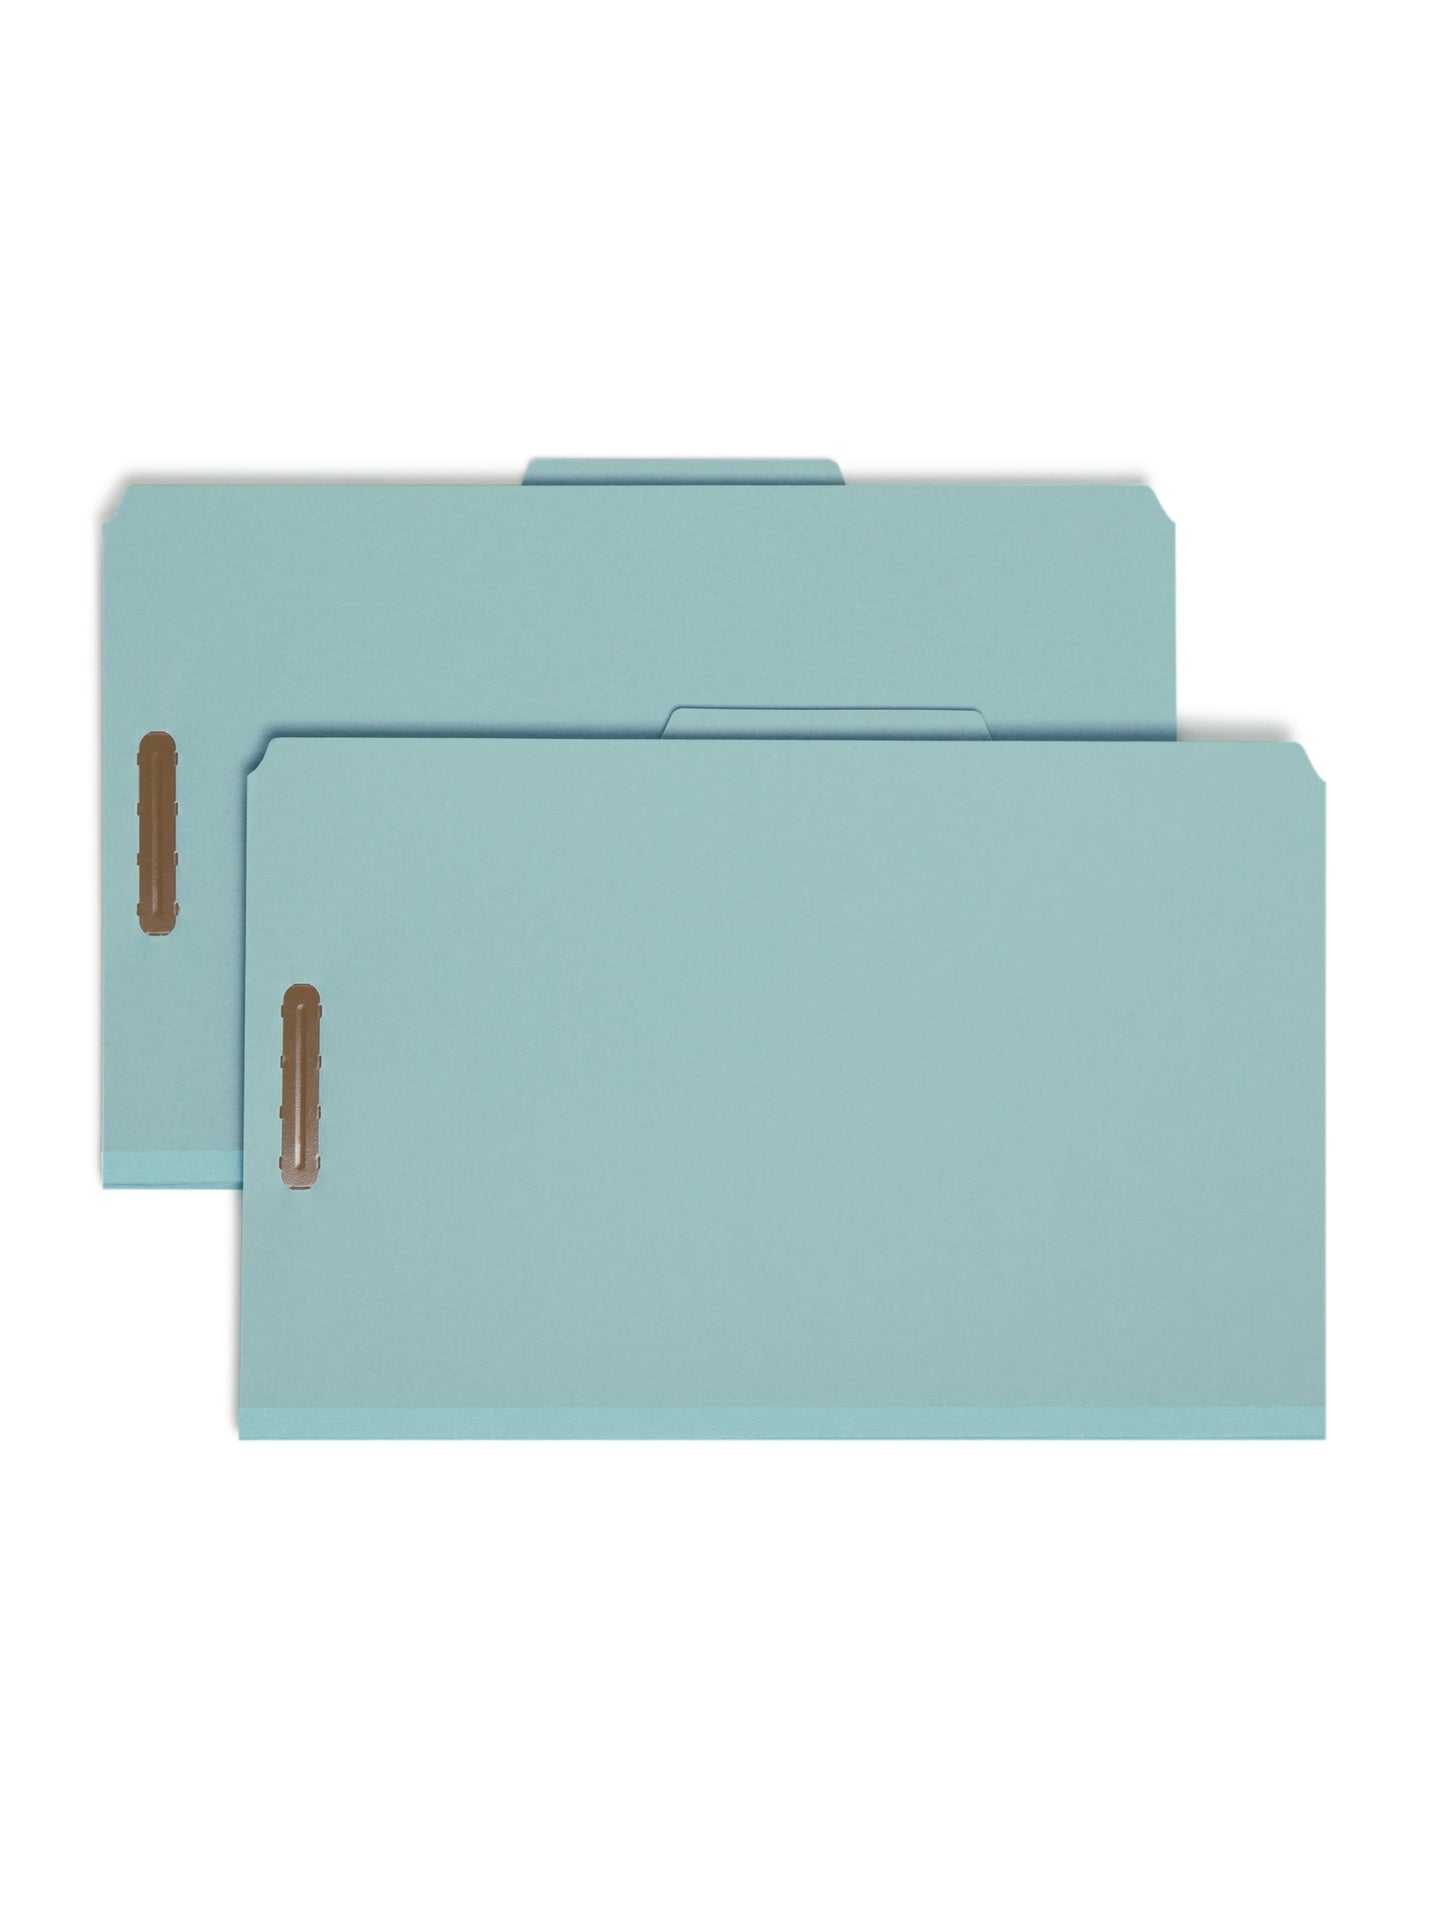 Pressboard Classification File Folders, 1 Divider, 2 inch Expansion, Blue Color, Legal Size, Set of 0, 30086486187214